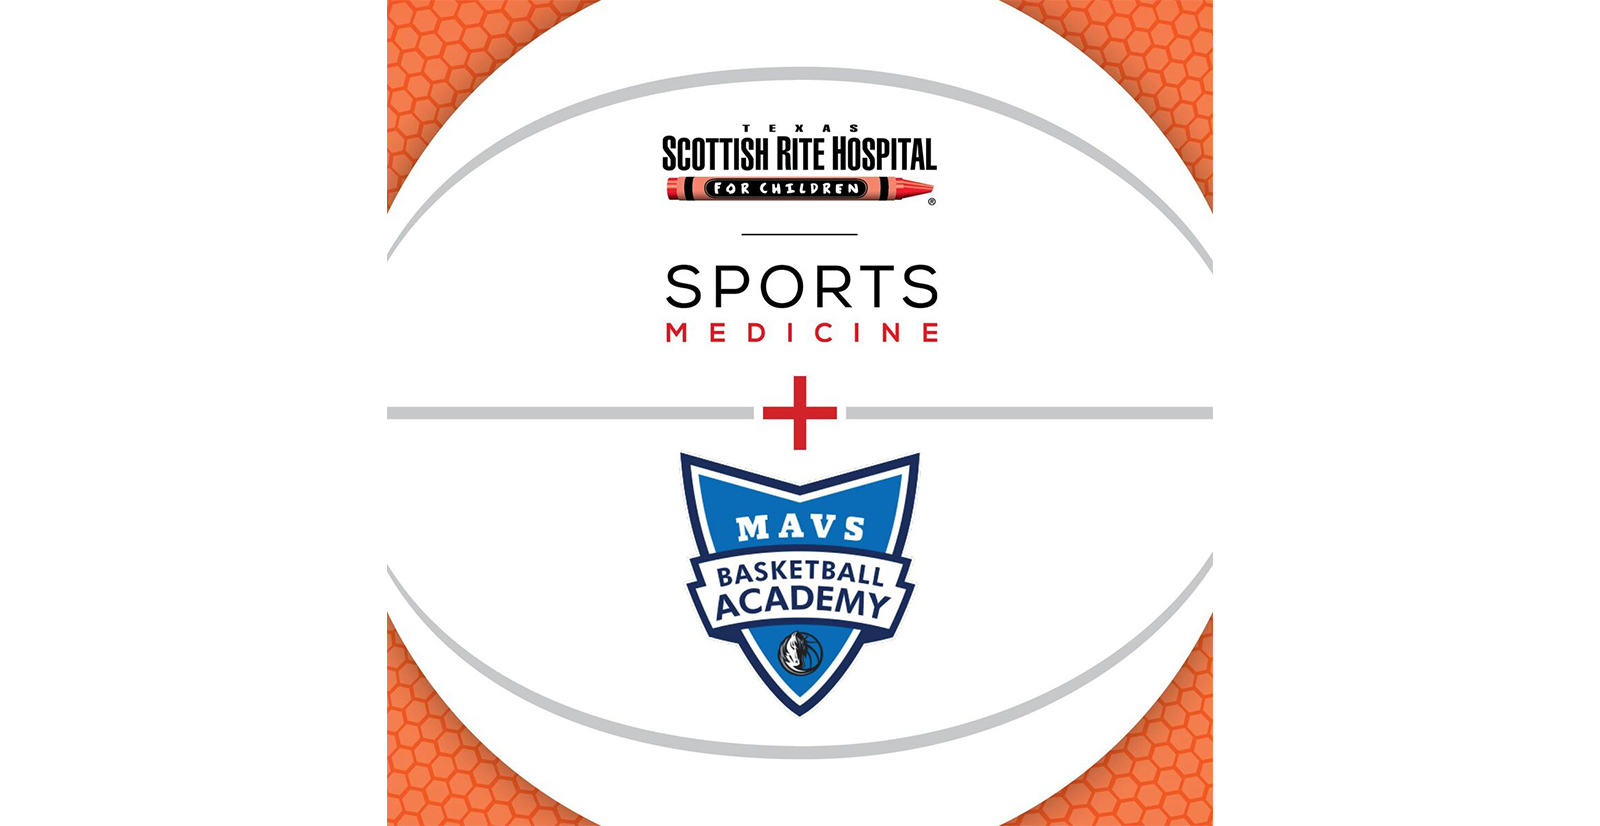 Sports Medicine logo plus the Mavs Basketball Academy logo